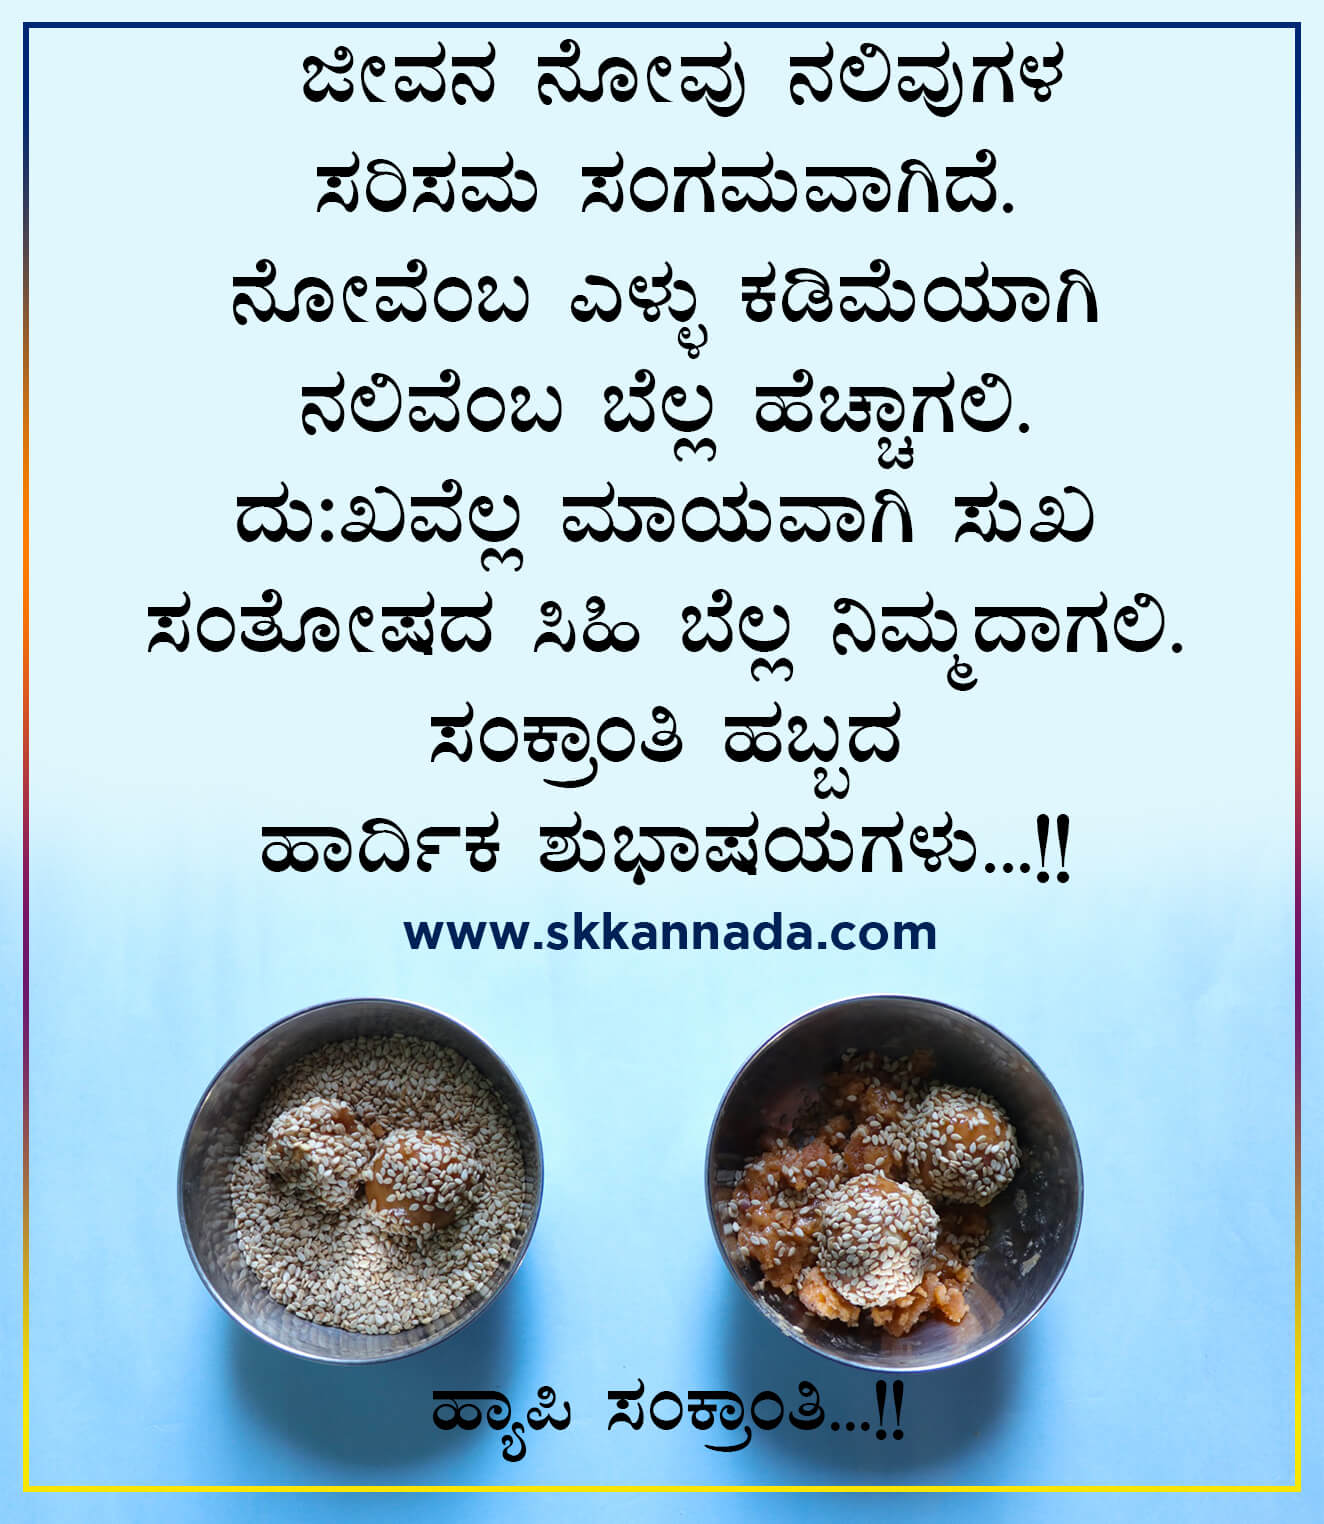 Makar Sankranti Wishes and quotes in Kannada